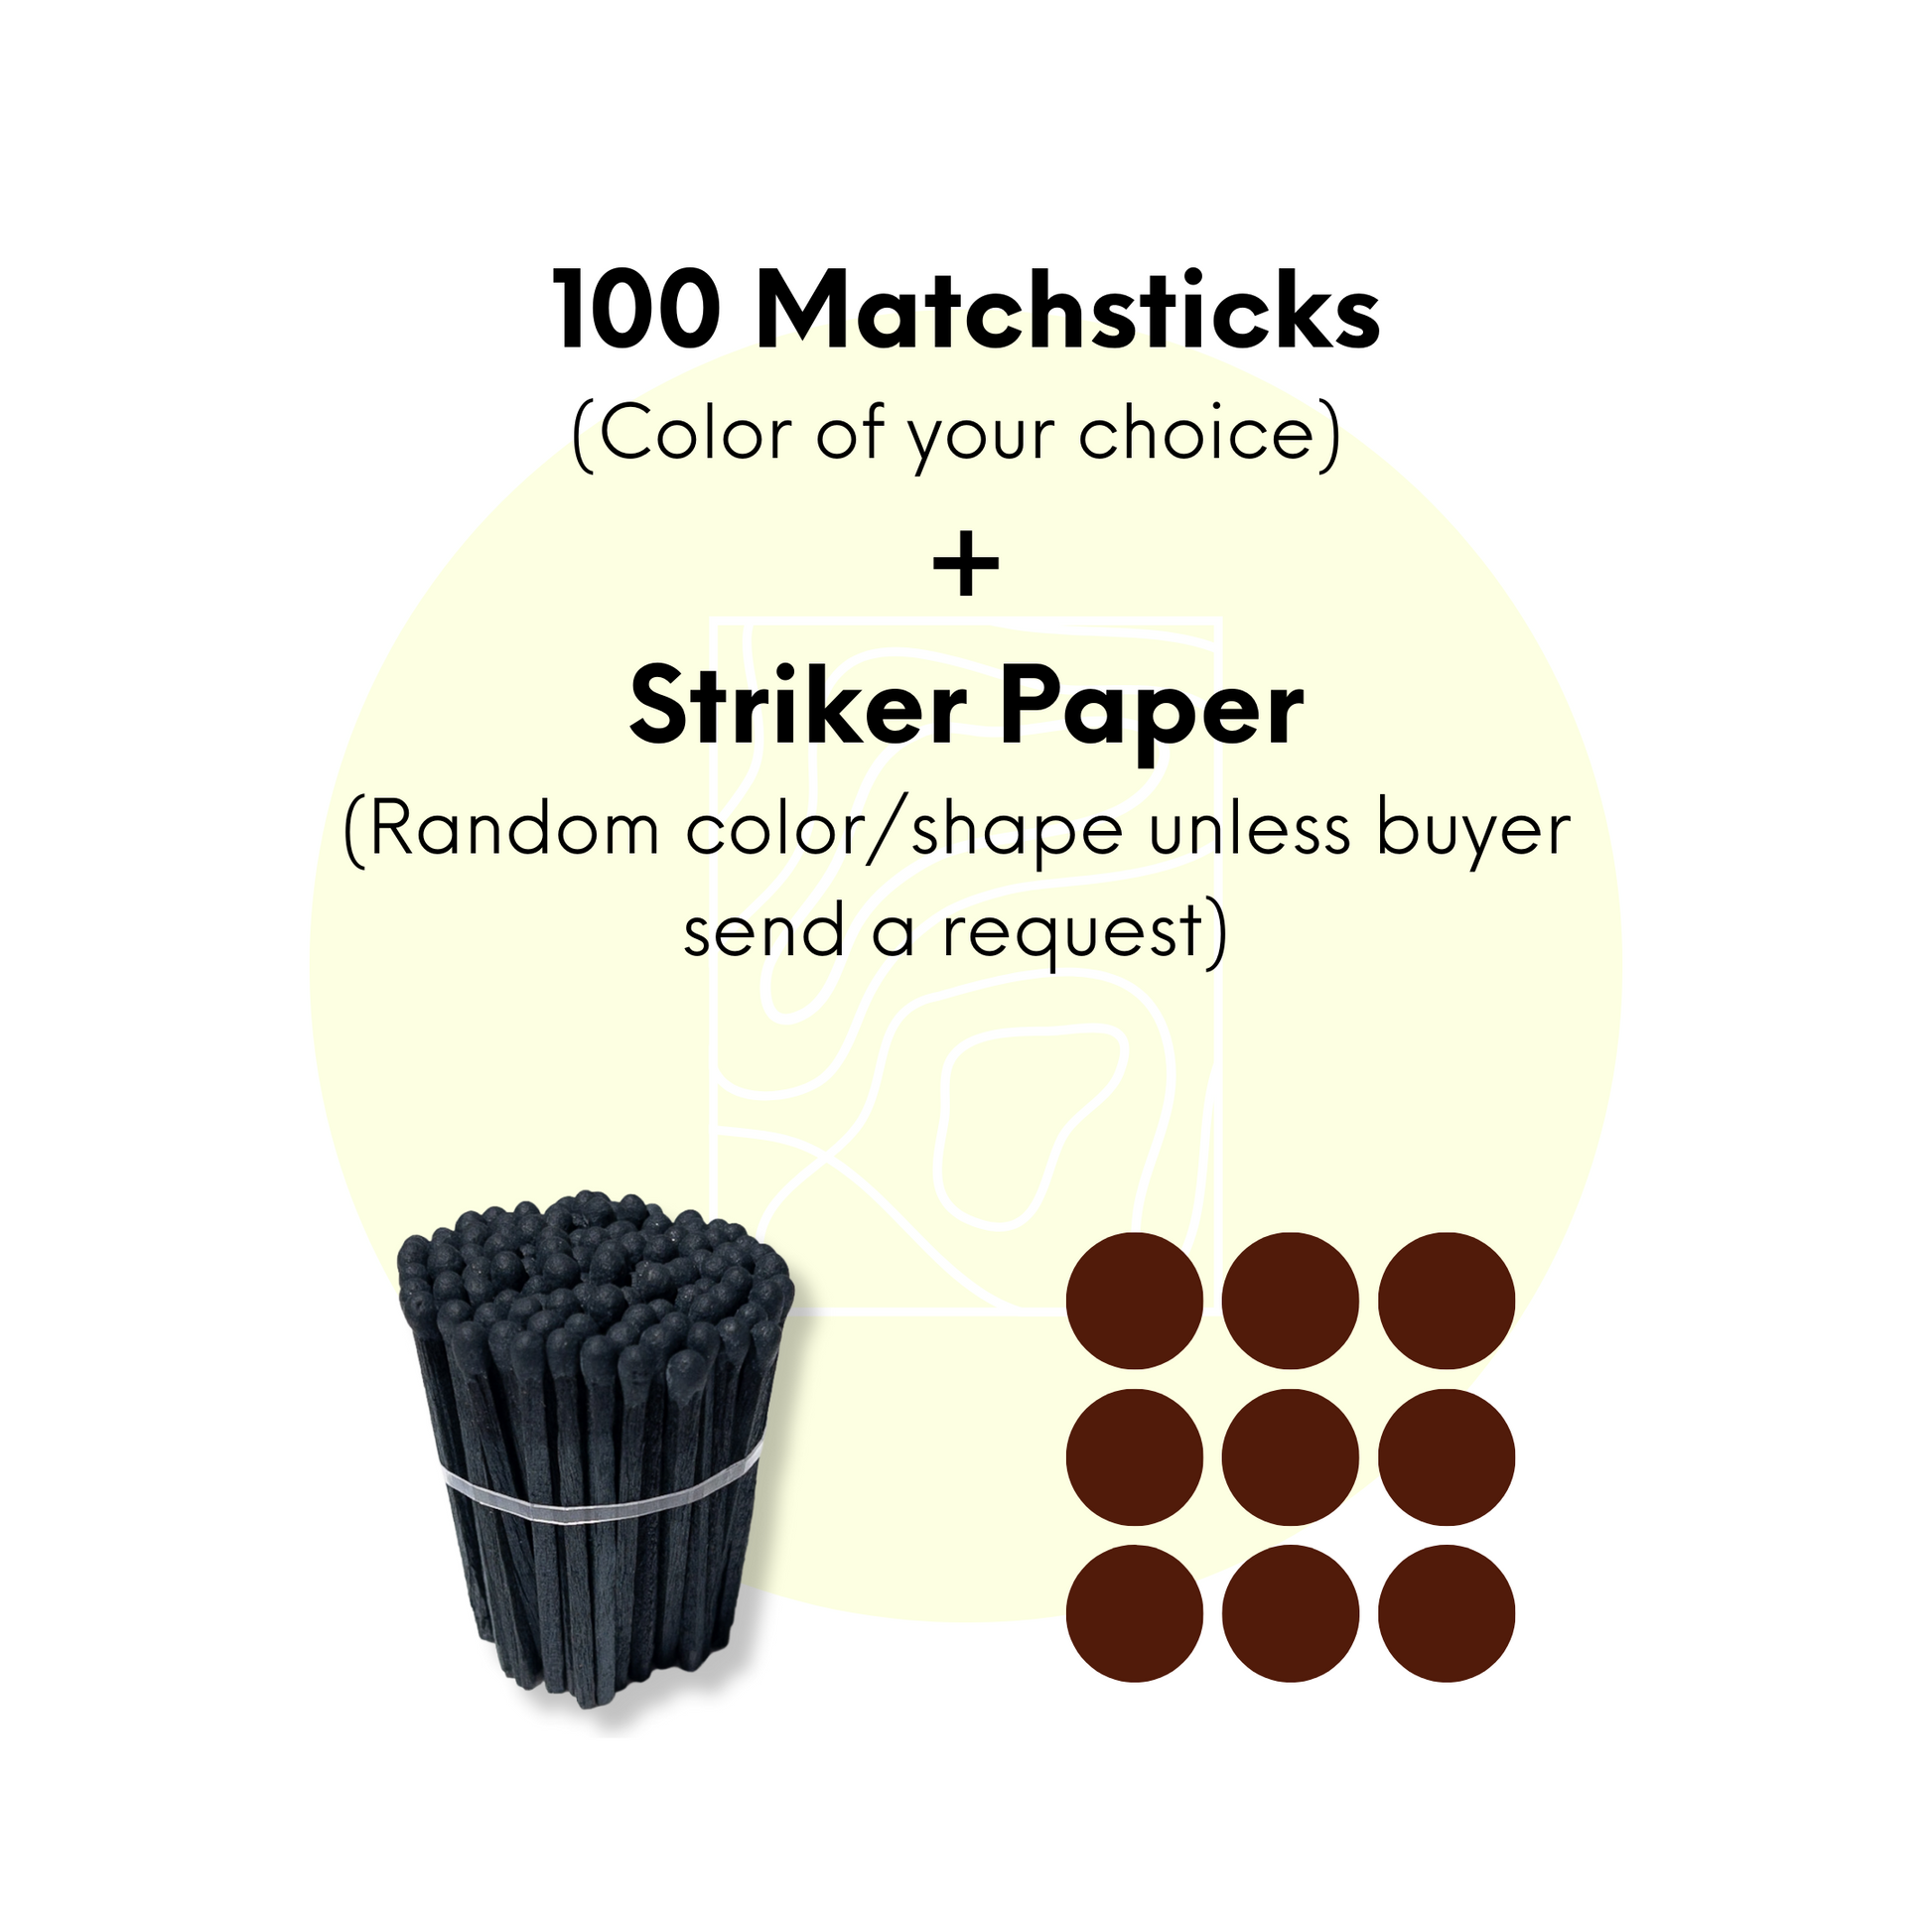 Matchstick Wholesale Bulk Hotel Matches